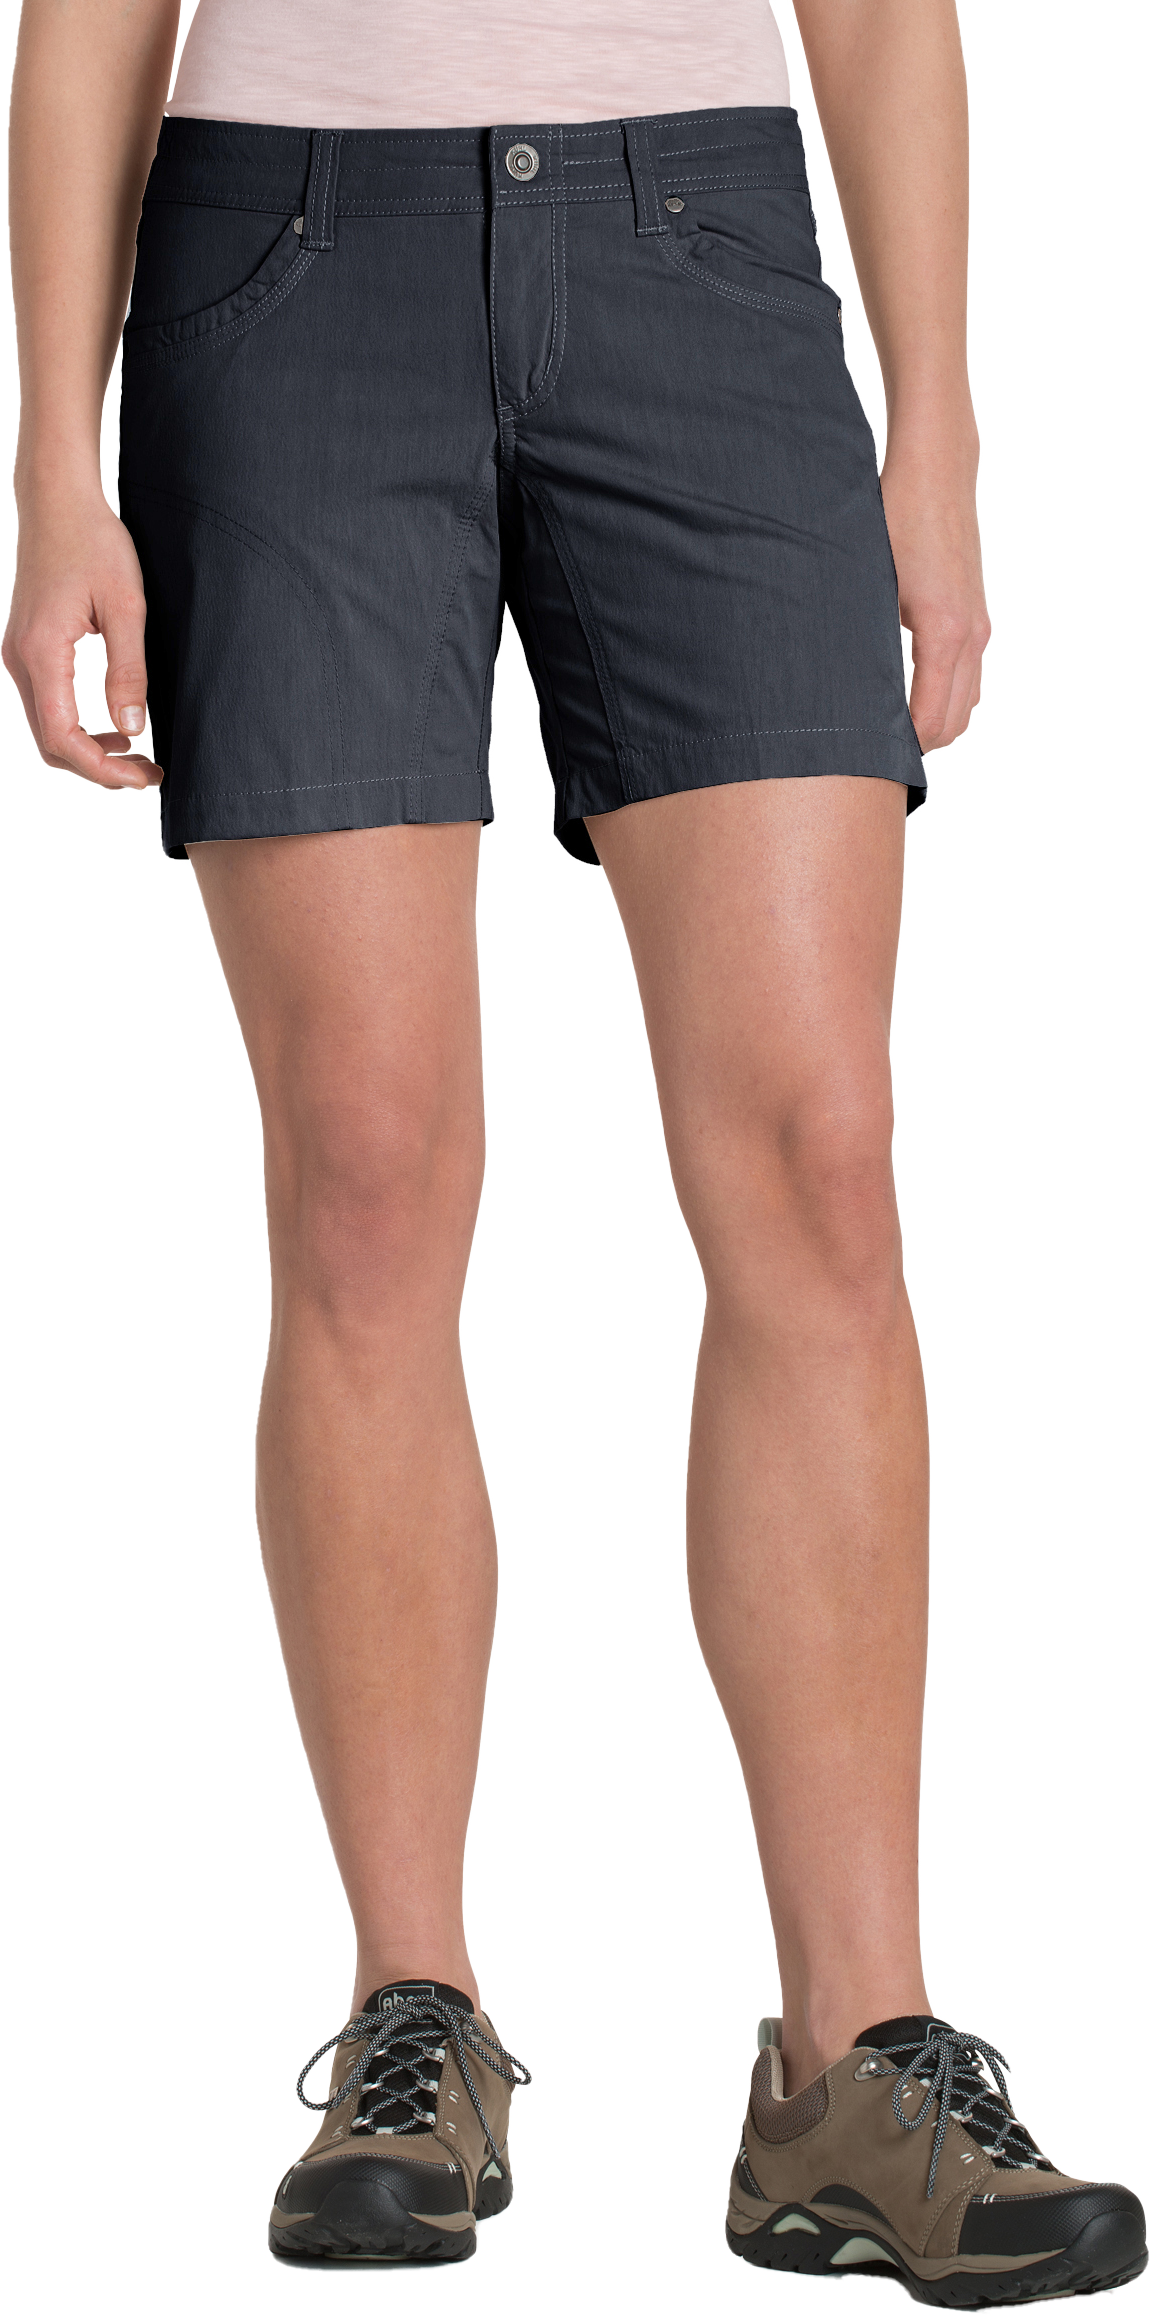 KUHL Anika Convertible Soft Shell Hiking Pants Shorts Black Size 8 R